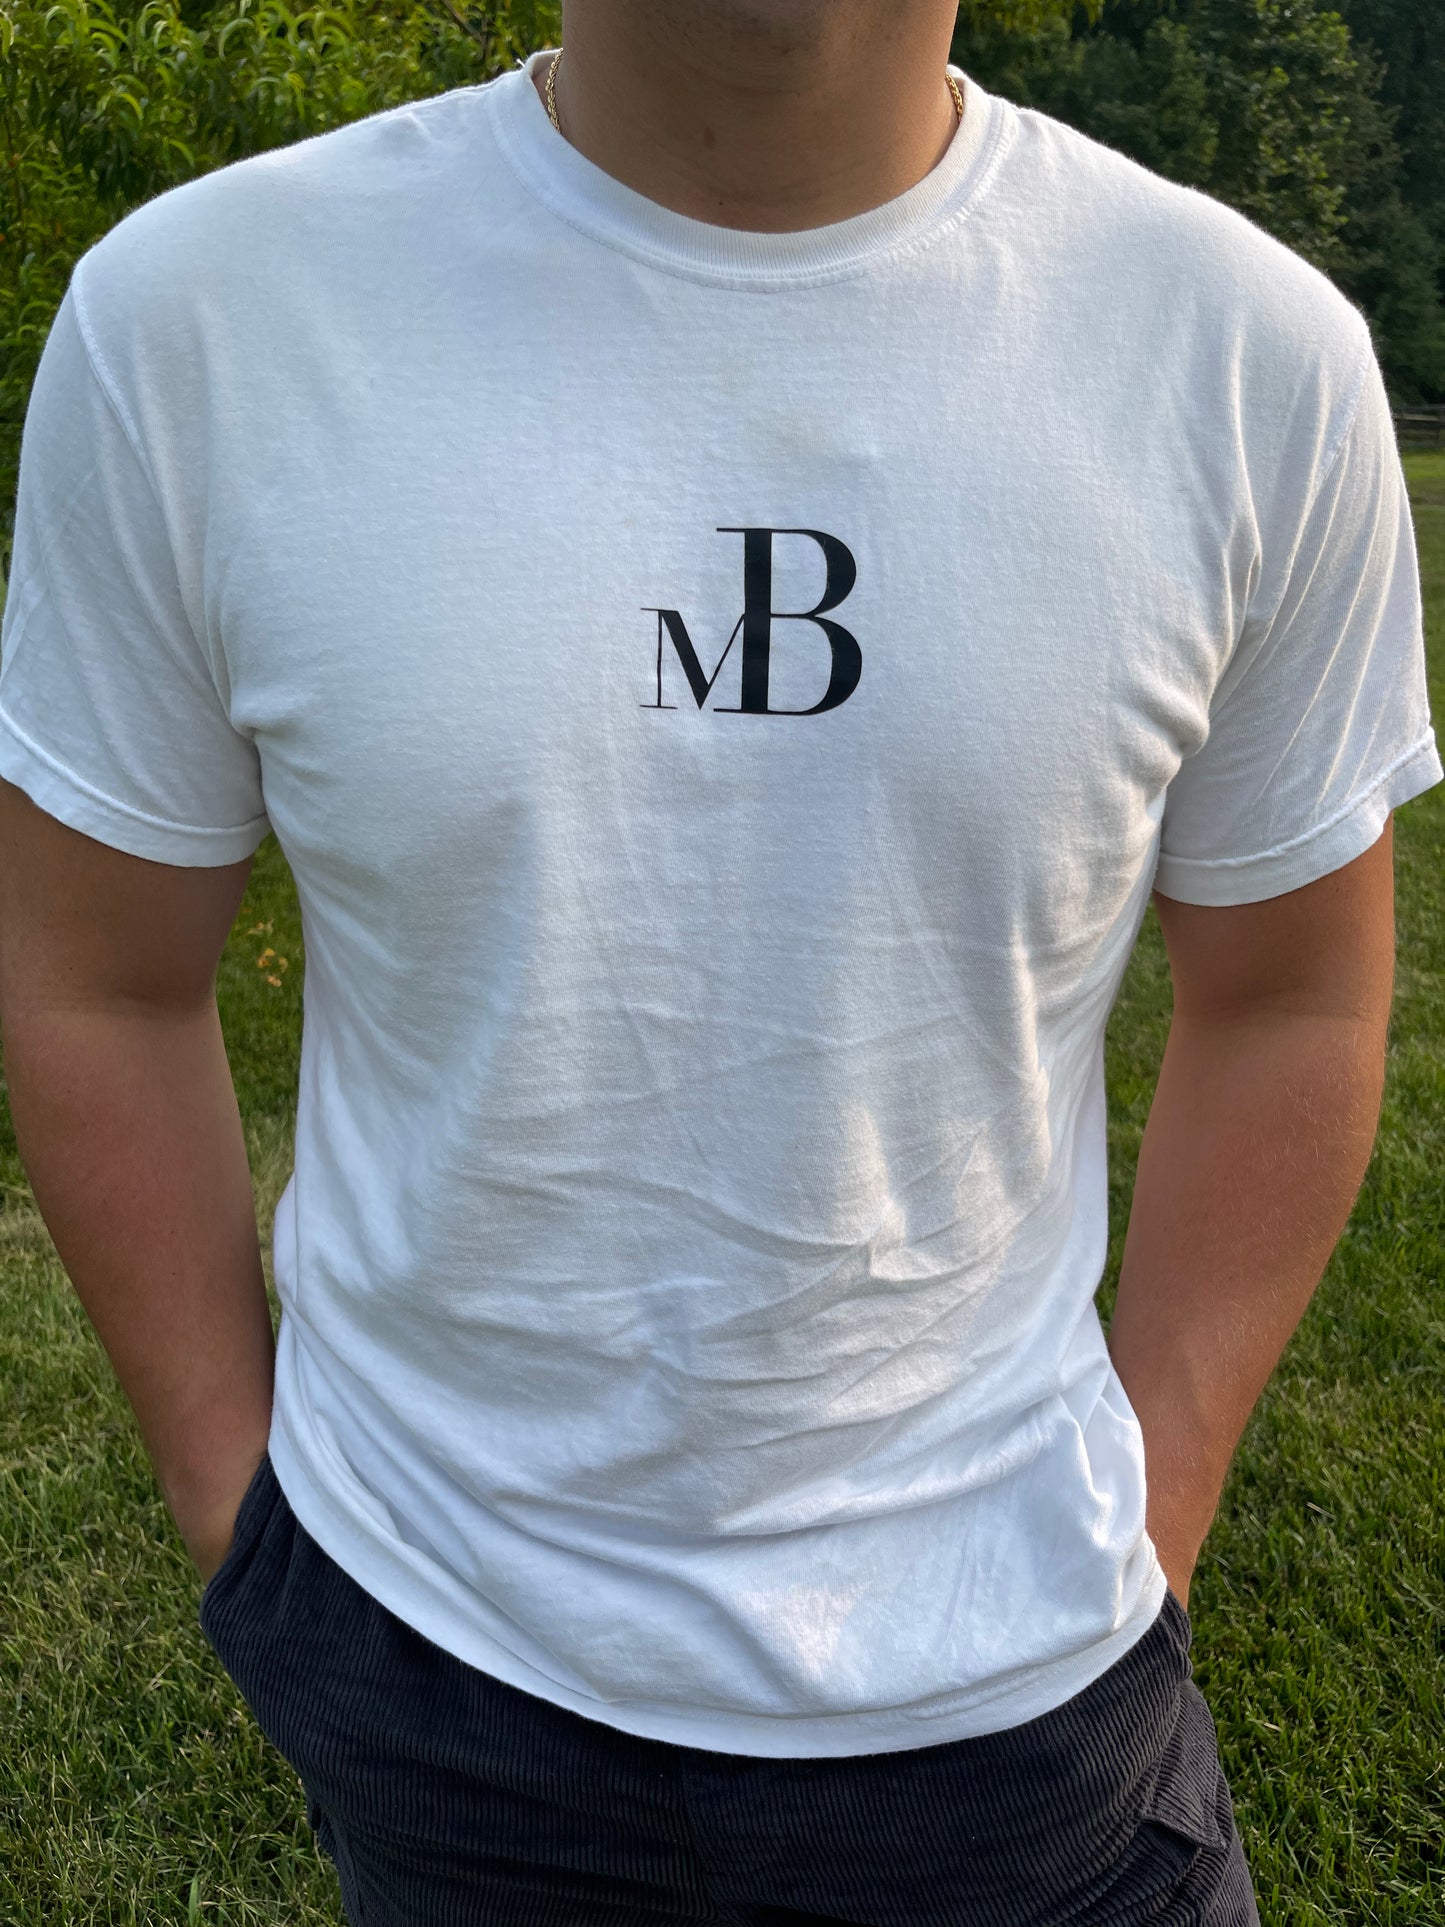 White mB logo T-shirt